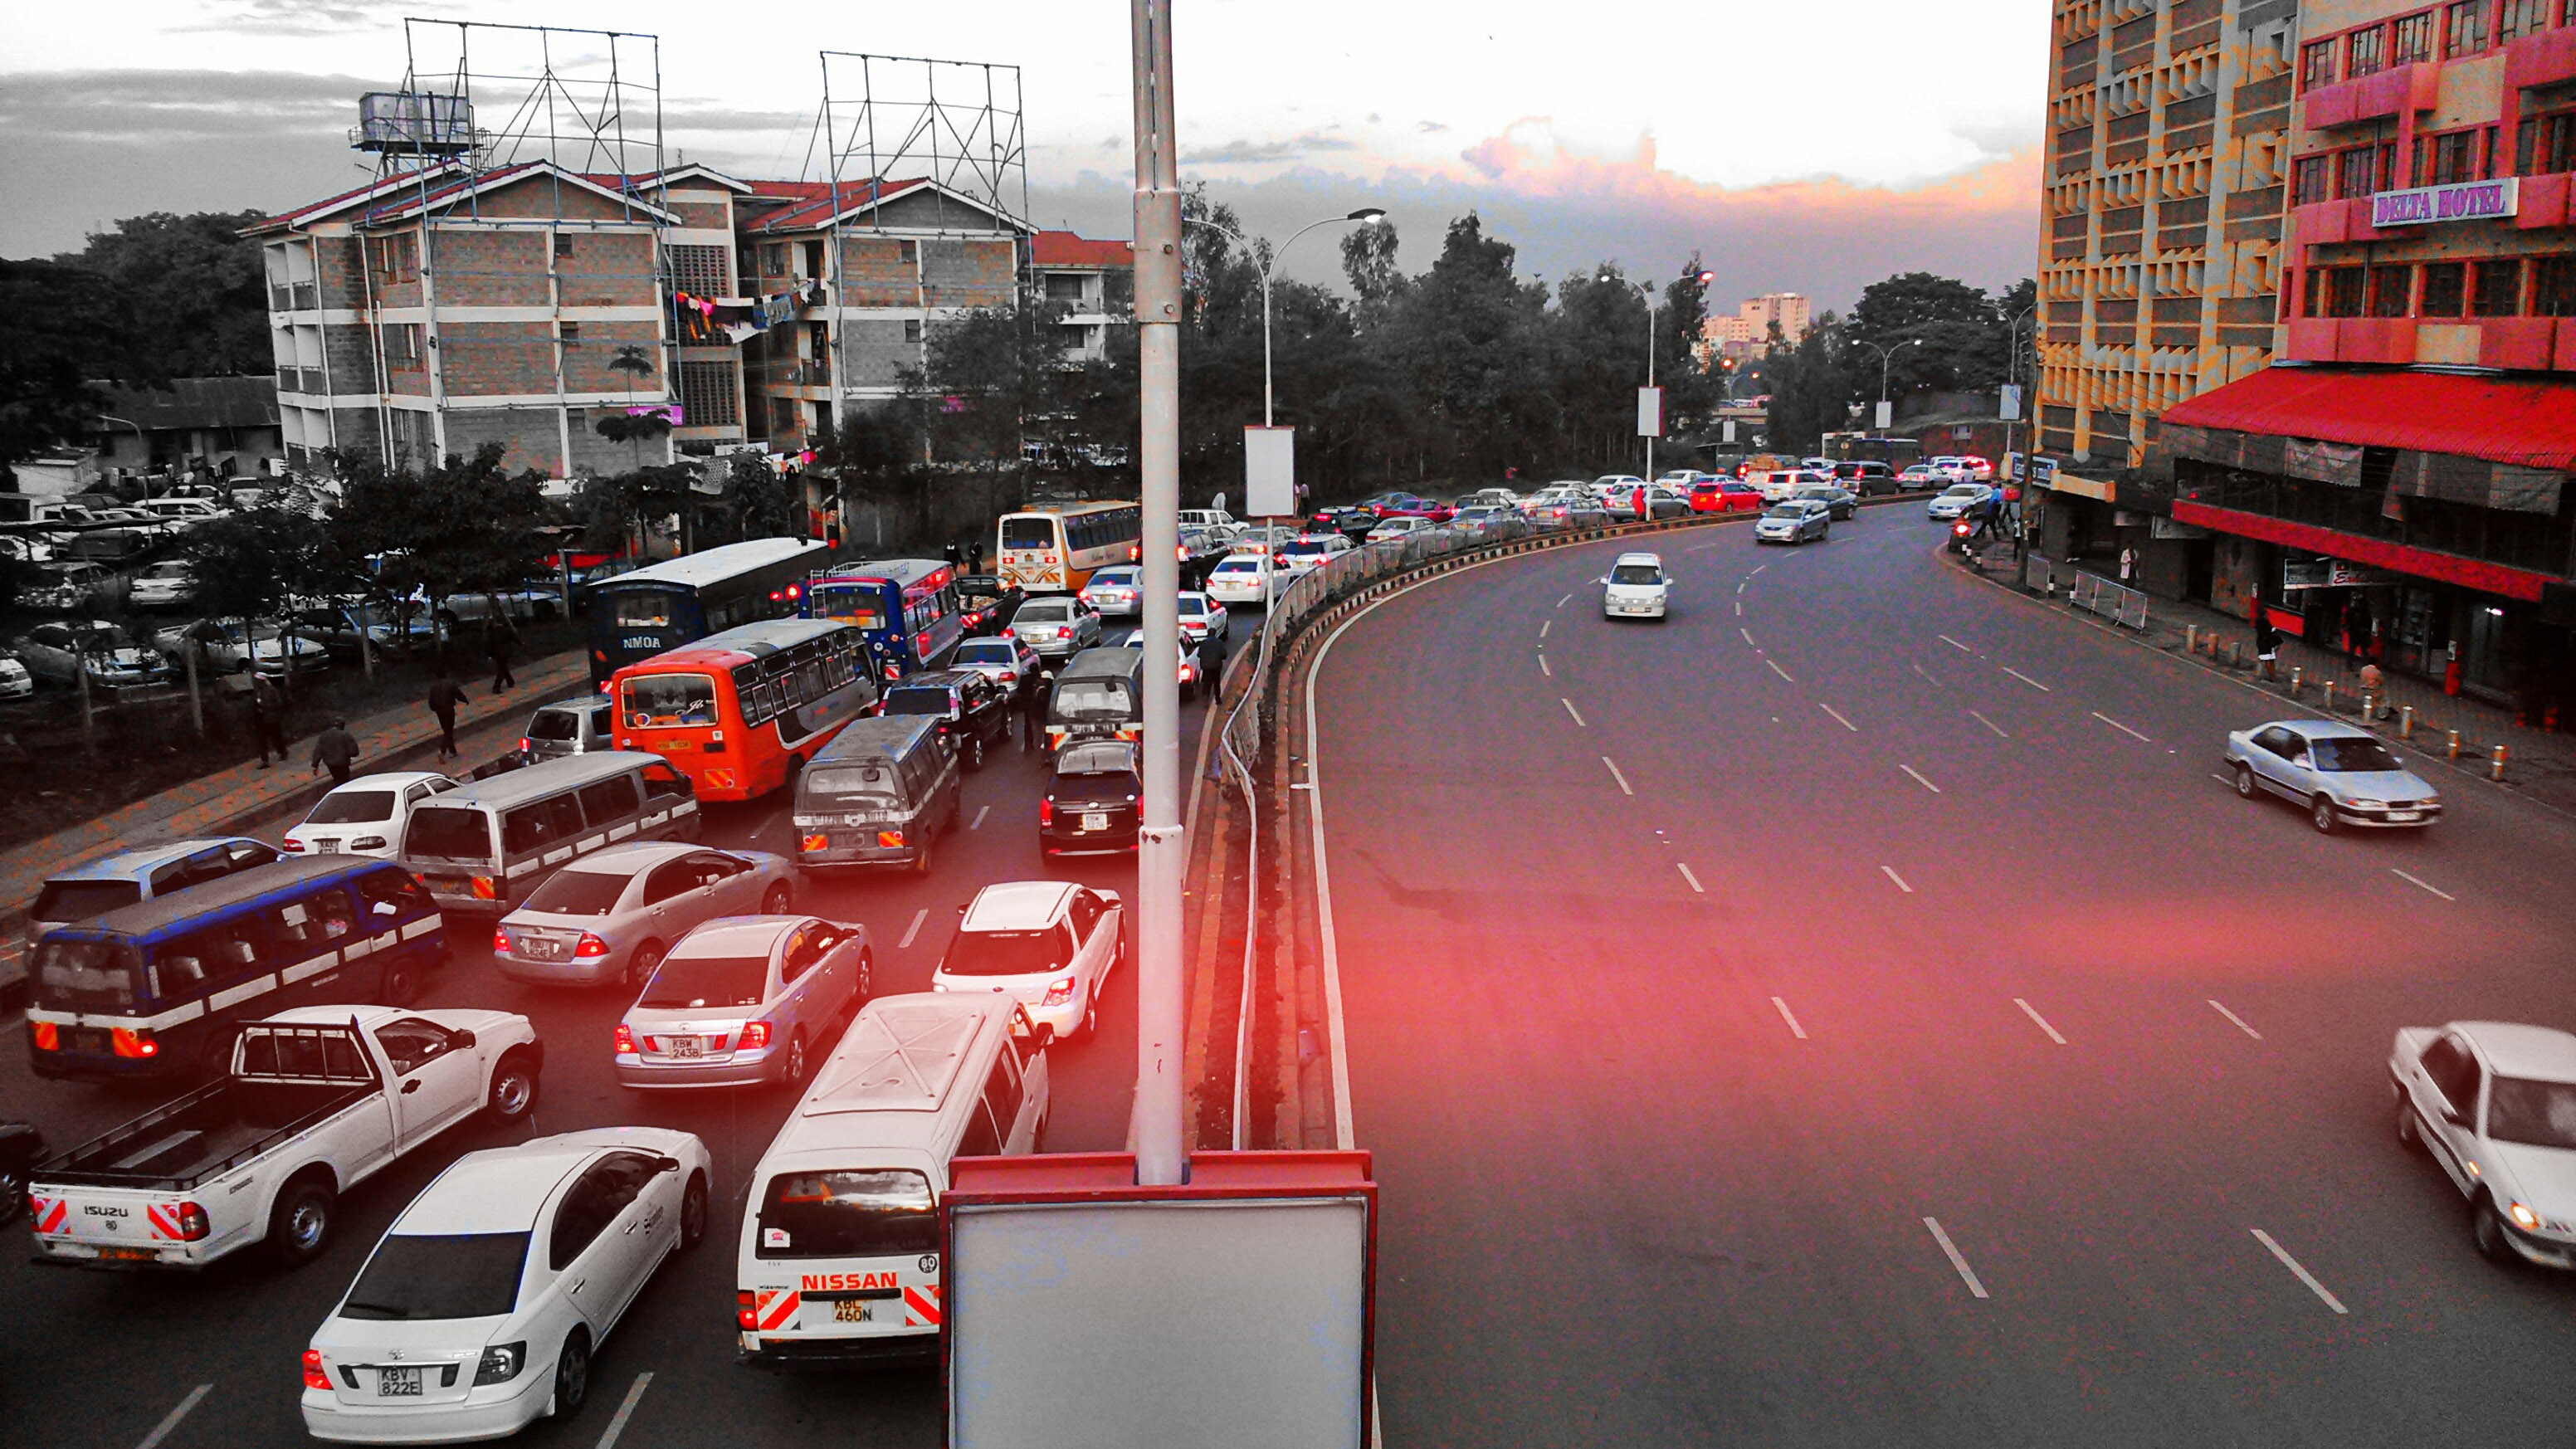 traffic-in-the-streets-of-nairobi-kenya.jpg